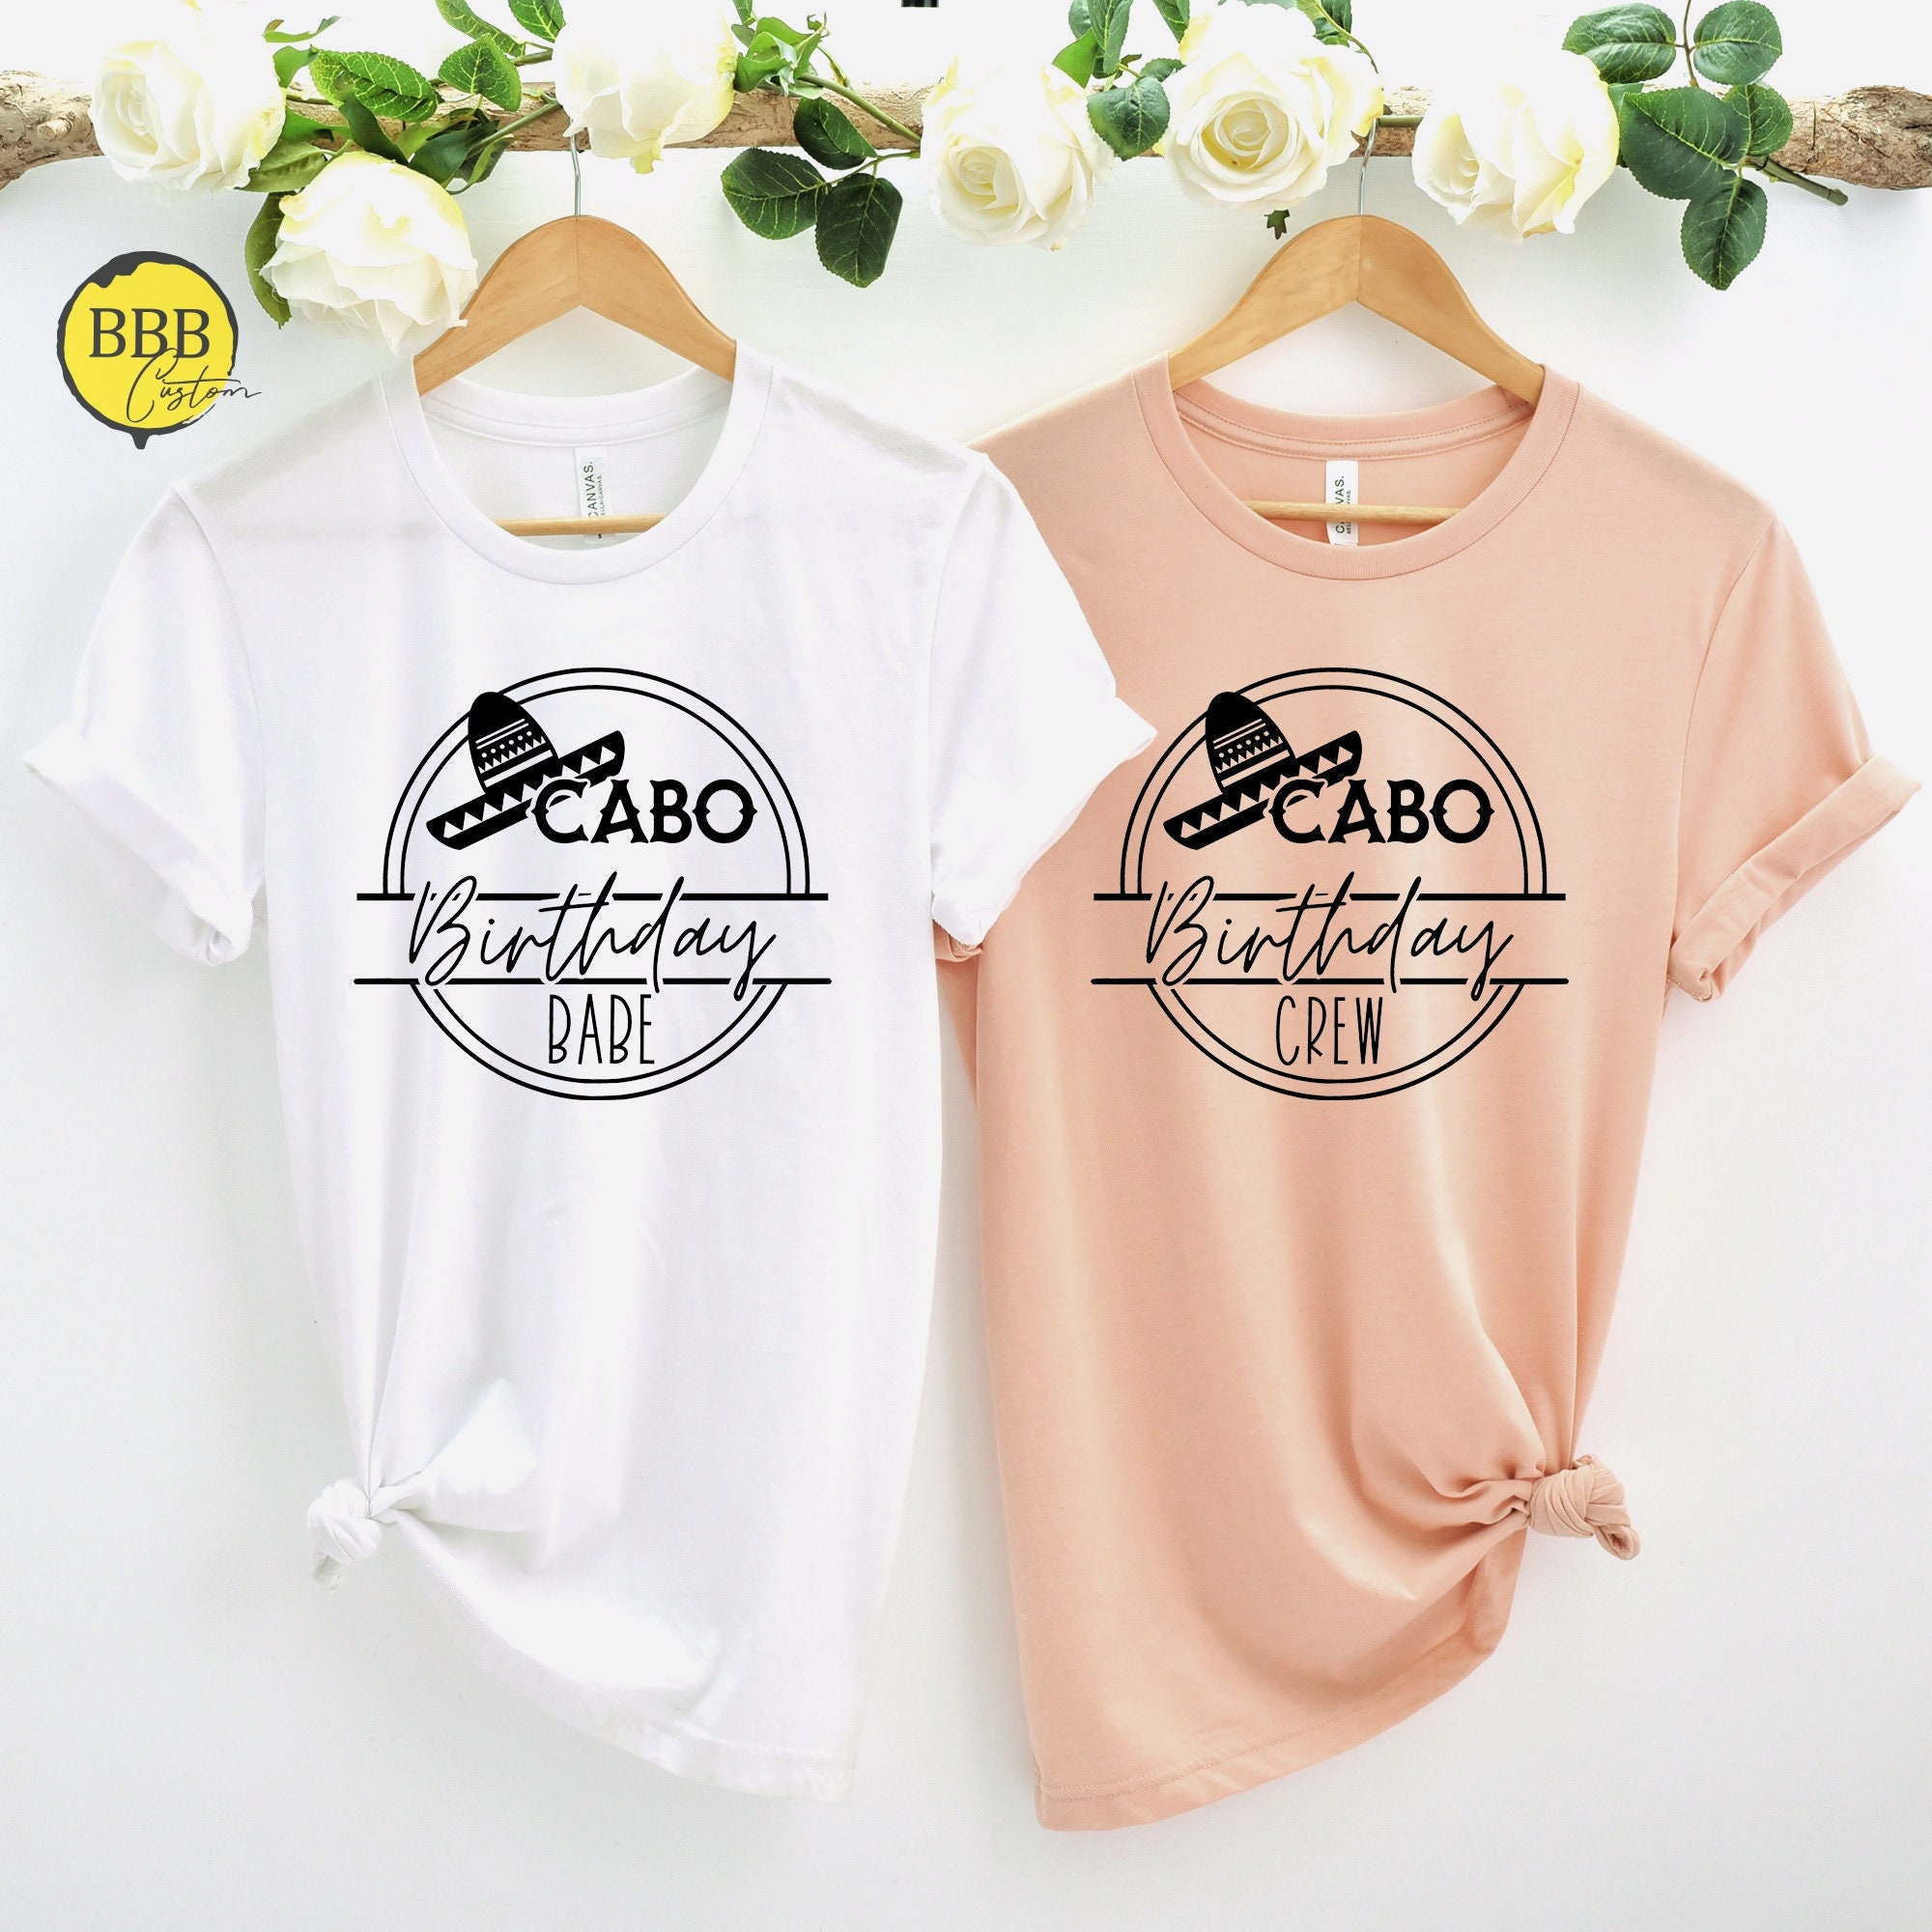 Cabo Birthday Crew Shirt, Cabo Travel Shirt, Girls Trip Shirts, Vacation Shirts